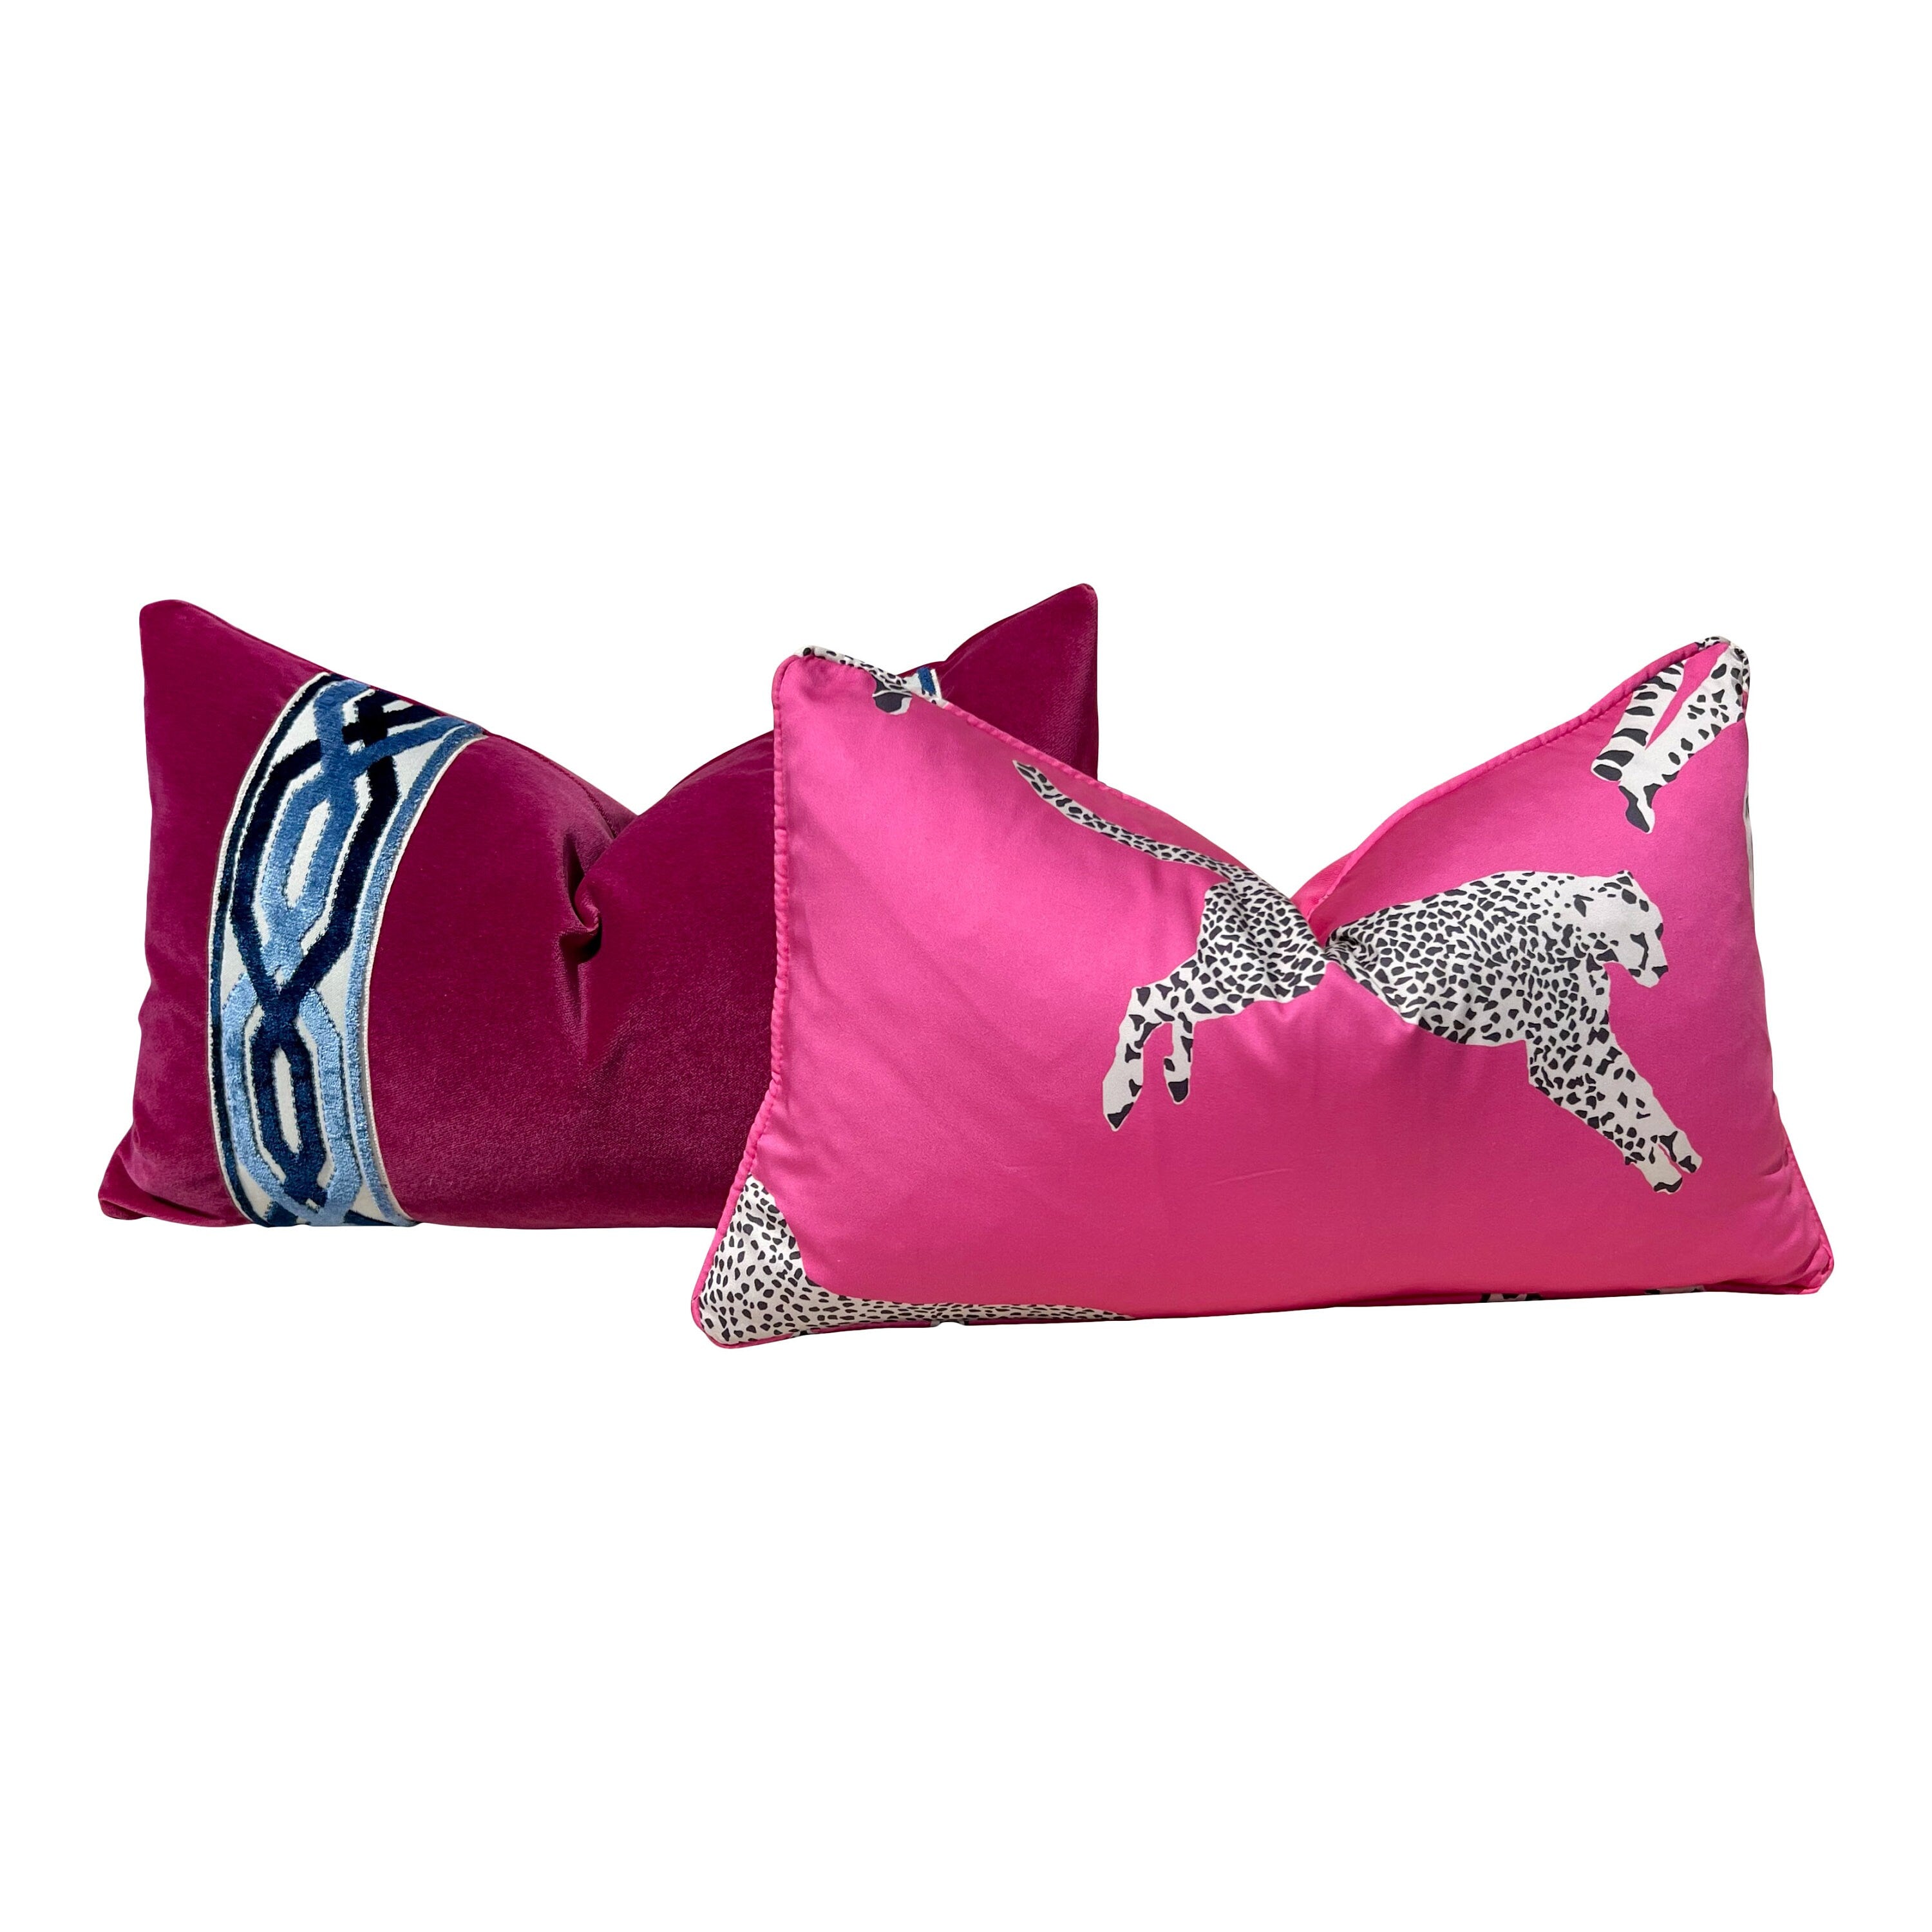 Designer Velvet Pillow in Fuchsia with trim. Designer Velvet Pillows, Accent Velvet Pillow, Lumbar Fuchsia Pillows, Extra long Lumbar.